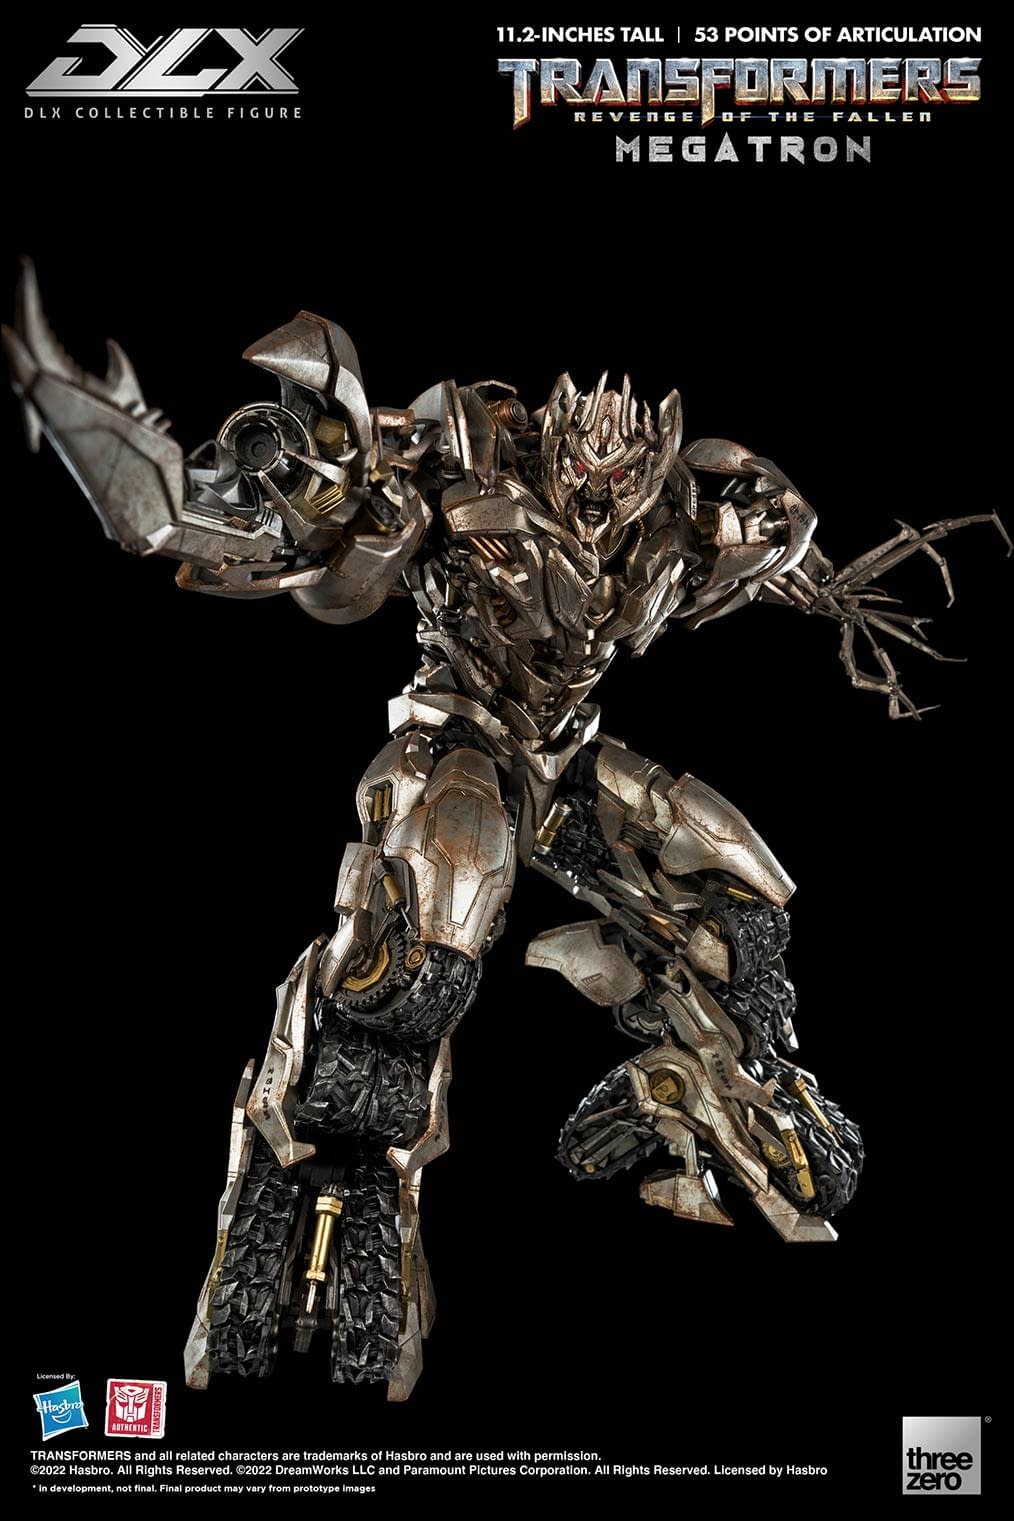 Megatron Wants War with threezero's Transformers DLX Series 